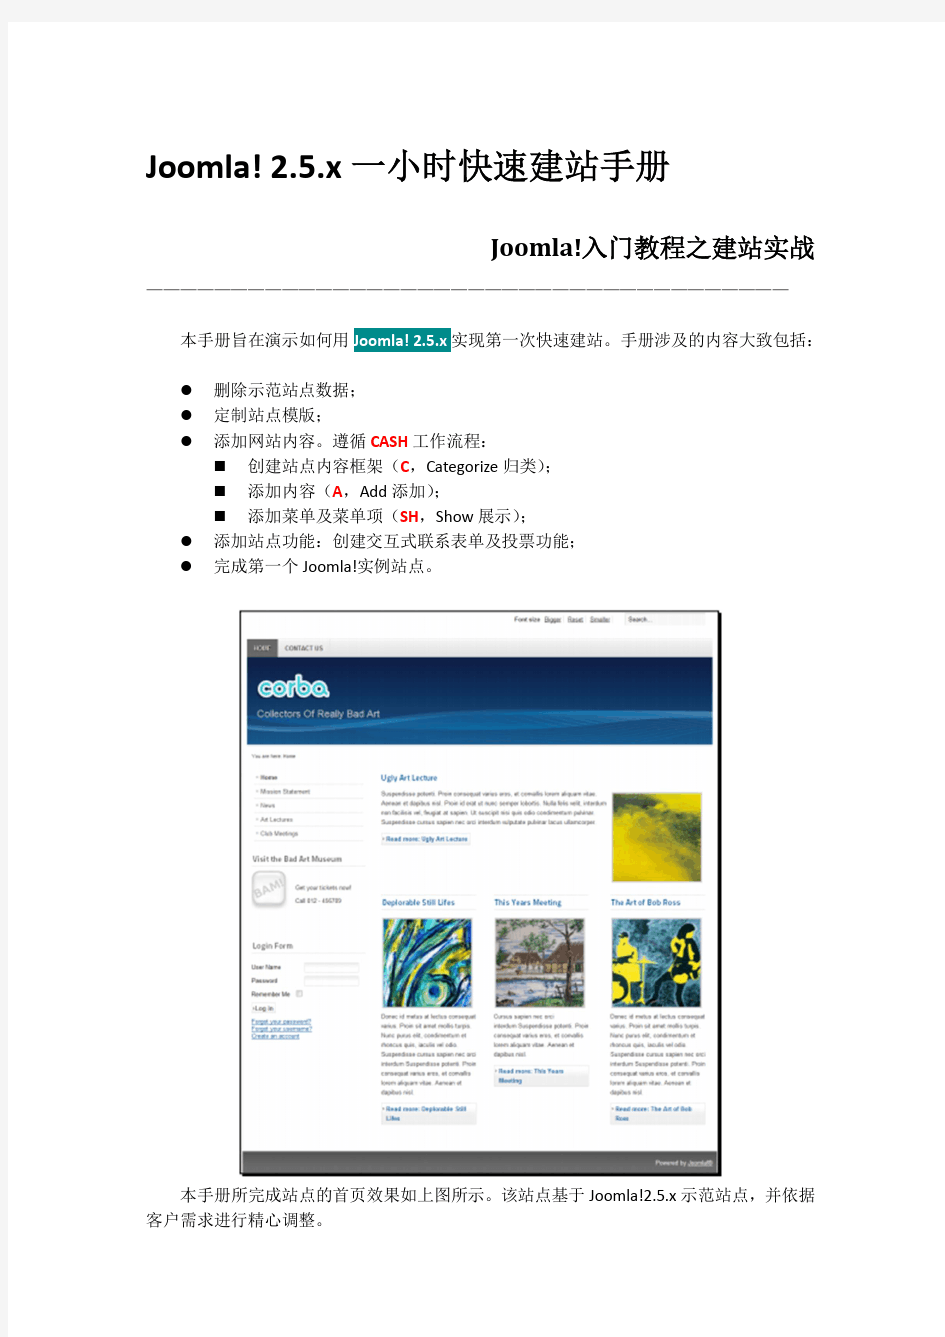 Joomla一小时快速建站手册-CORBA俱乐部